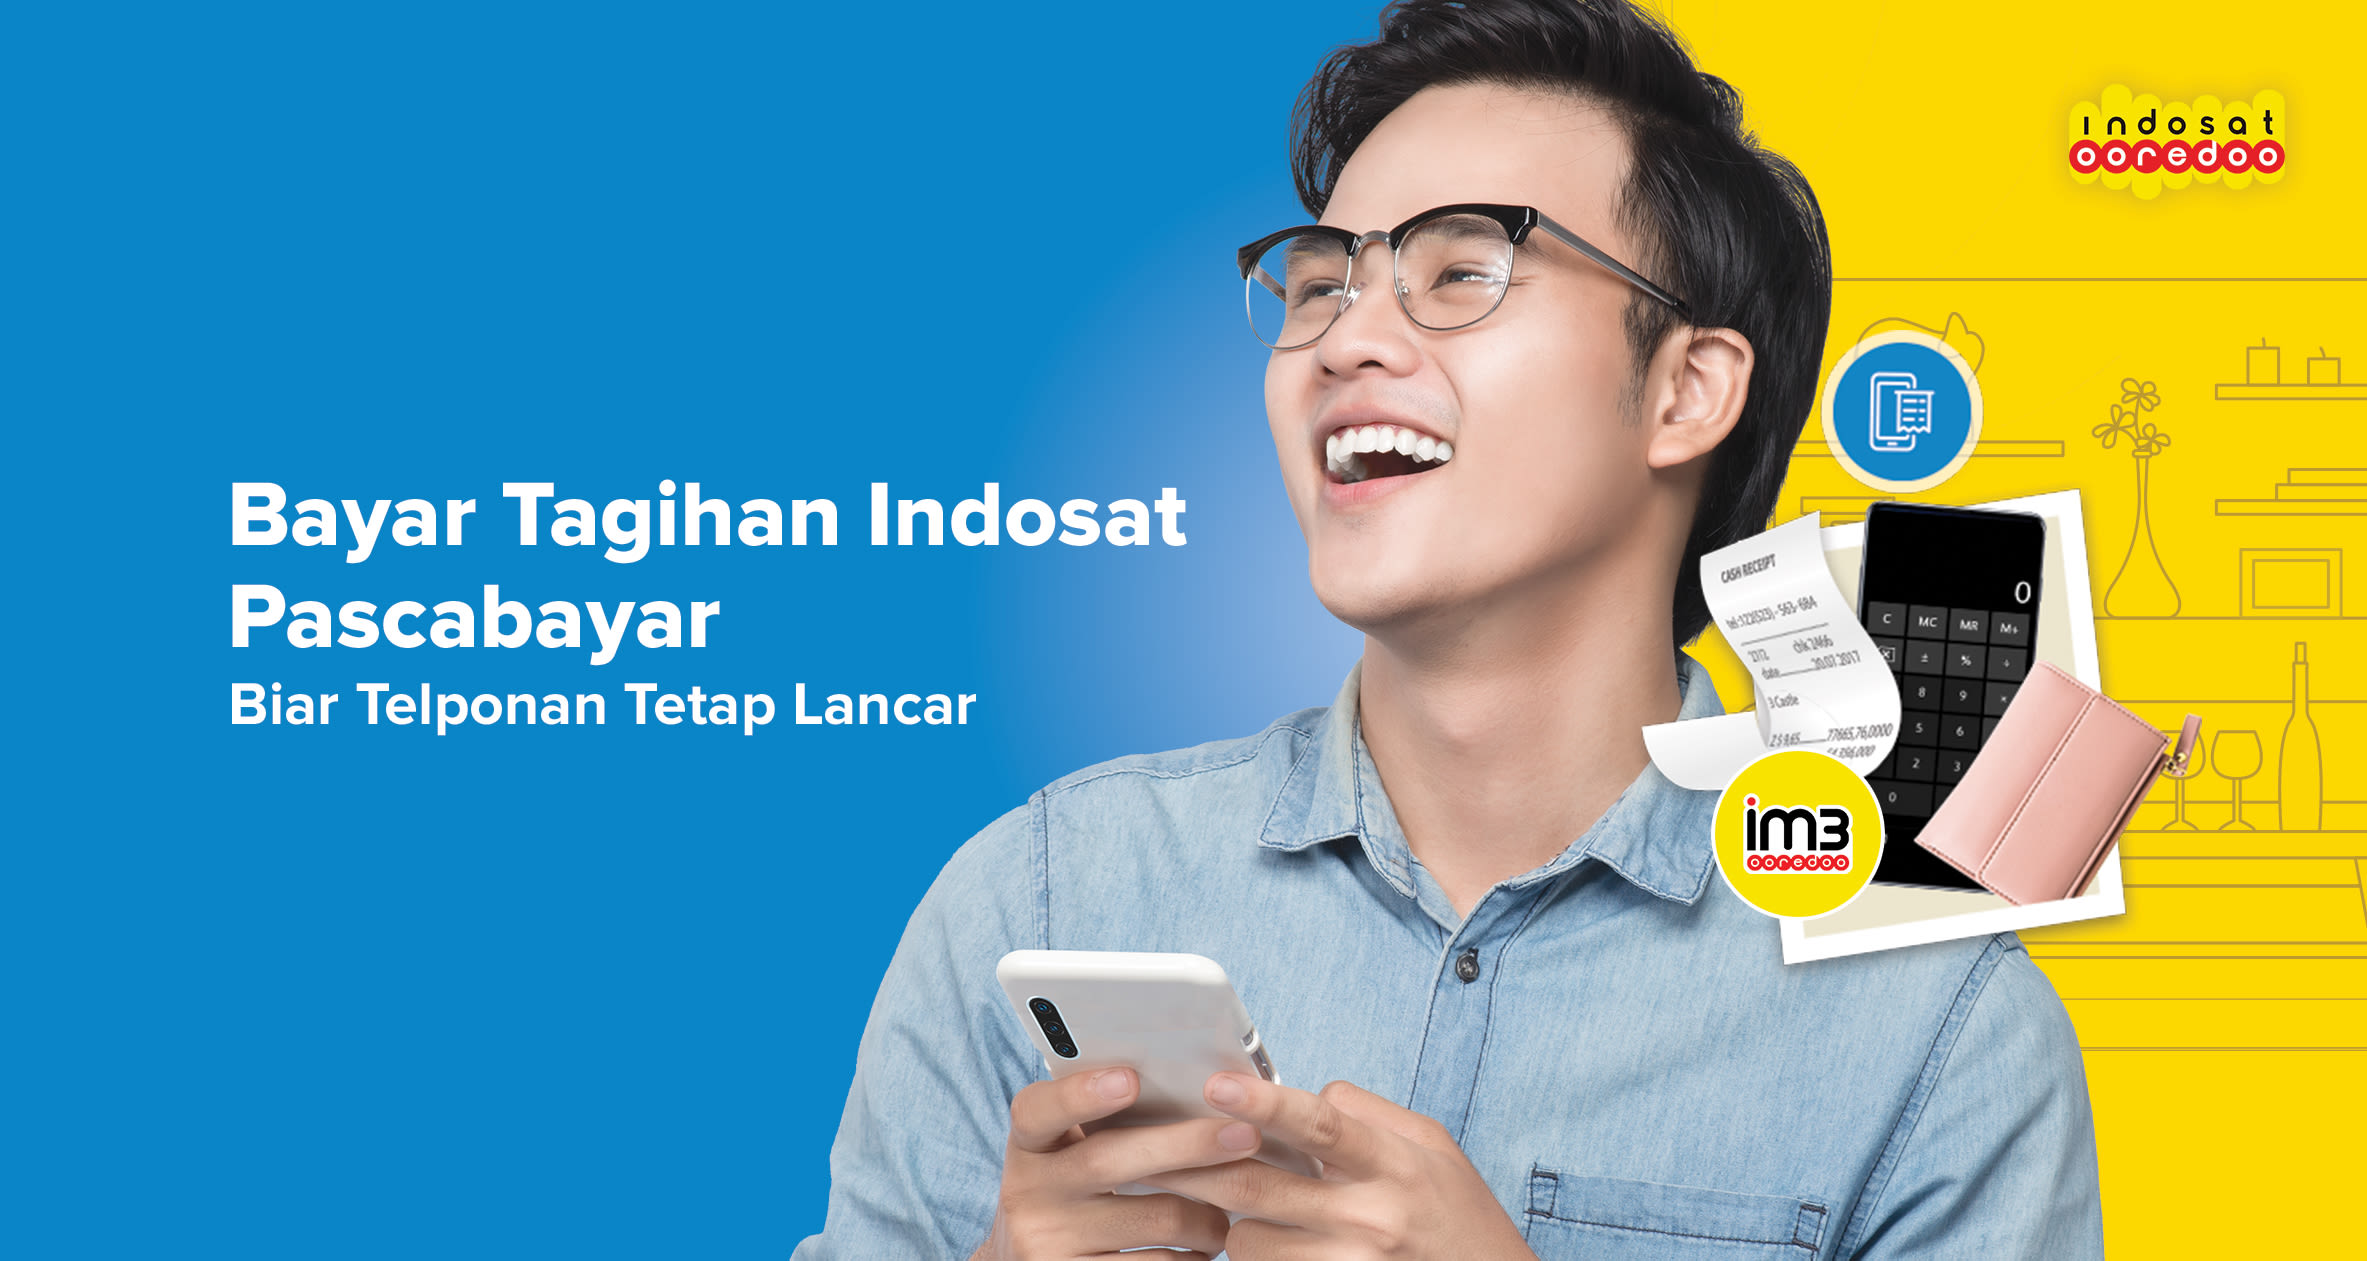 Bayar Tagihan Pascabayar Indosat, Proses Cepat dan Mudah ...